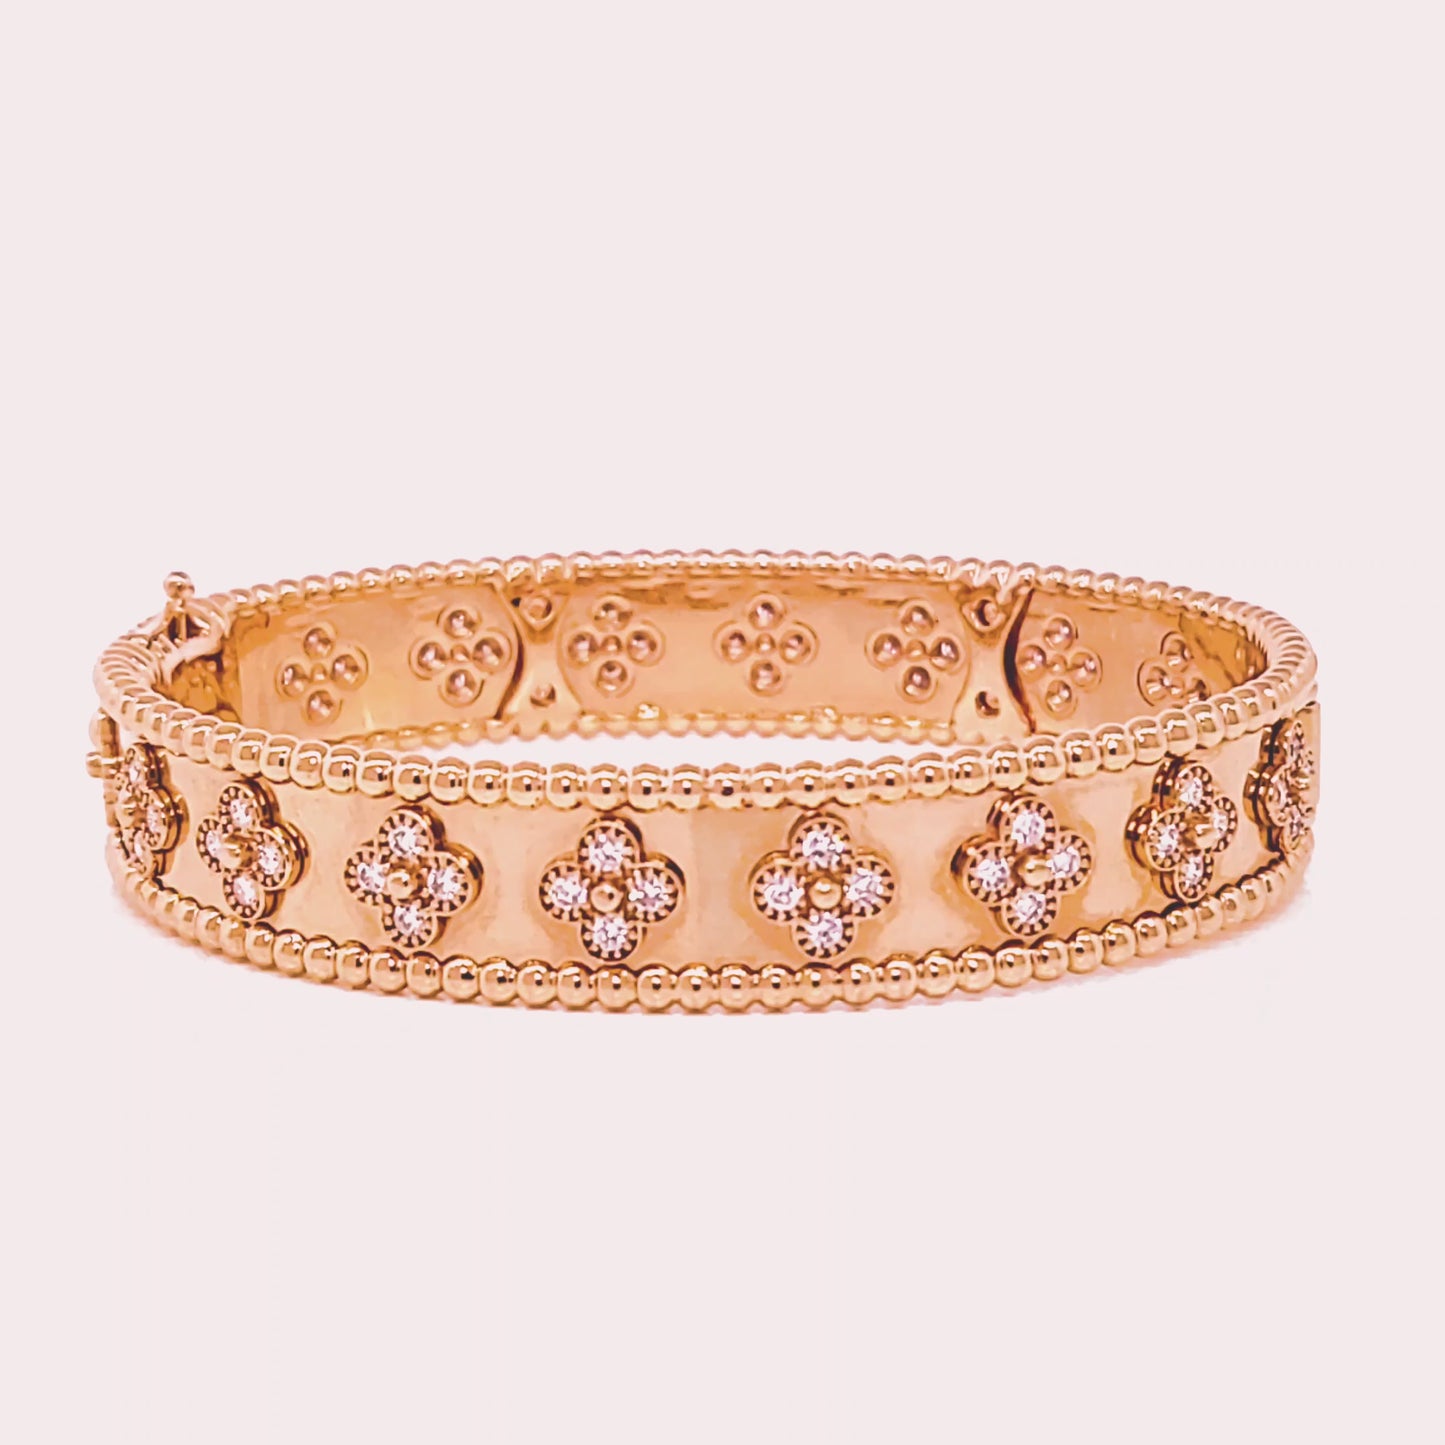 Pre-owned Van Cleef & Arpels Perlée Collection Diamond Bracelet in 18K Gold